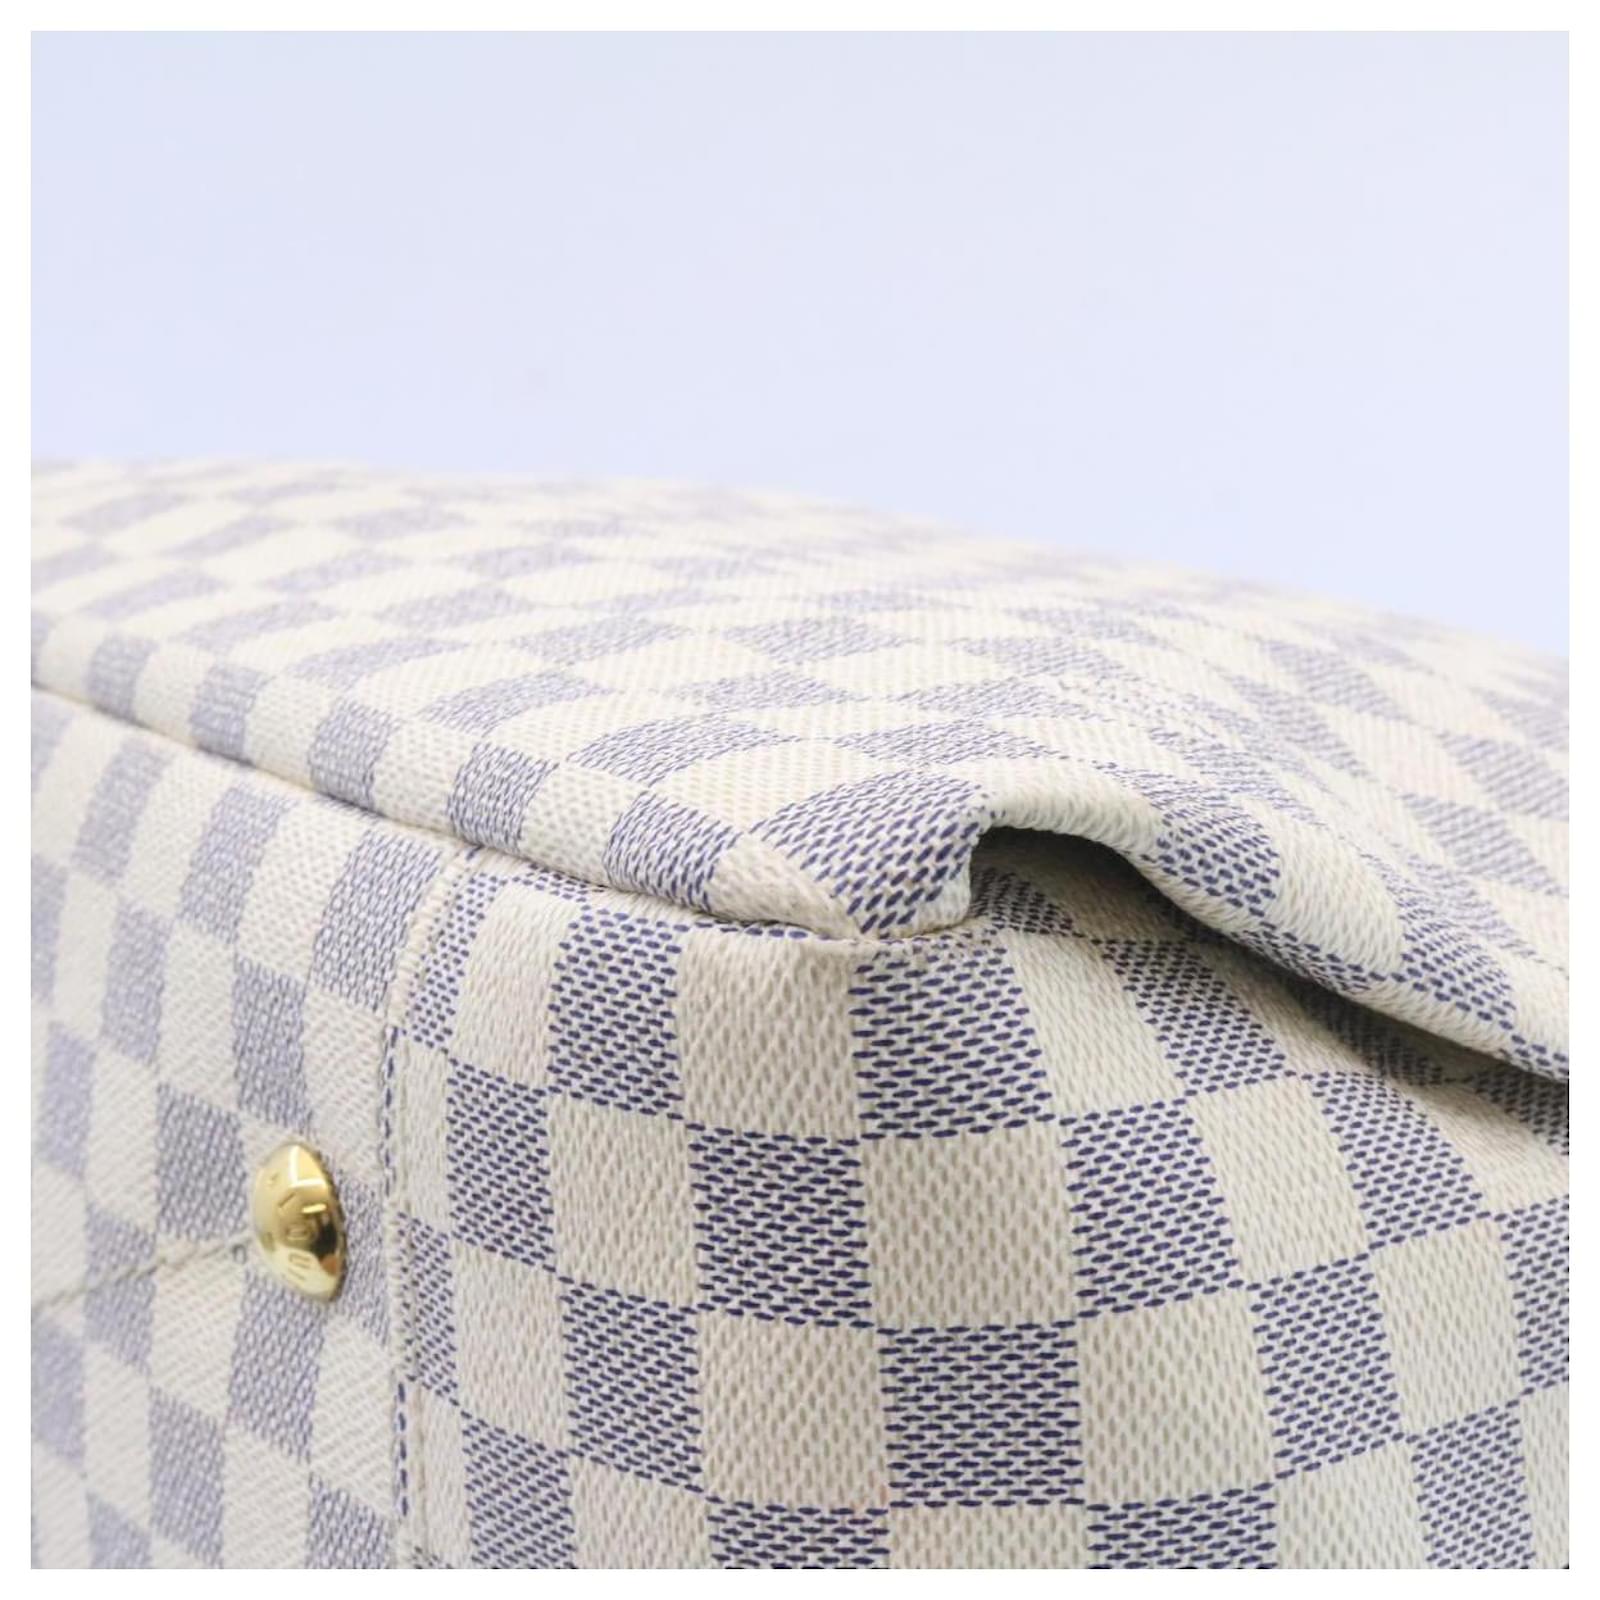 Louis Vuitton Artsy Mm Handbag Purse Damier Azur N41174 Ca4181